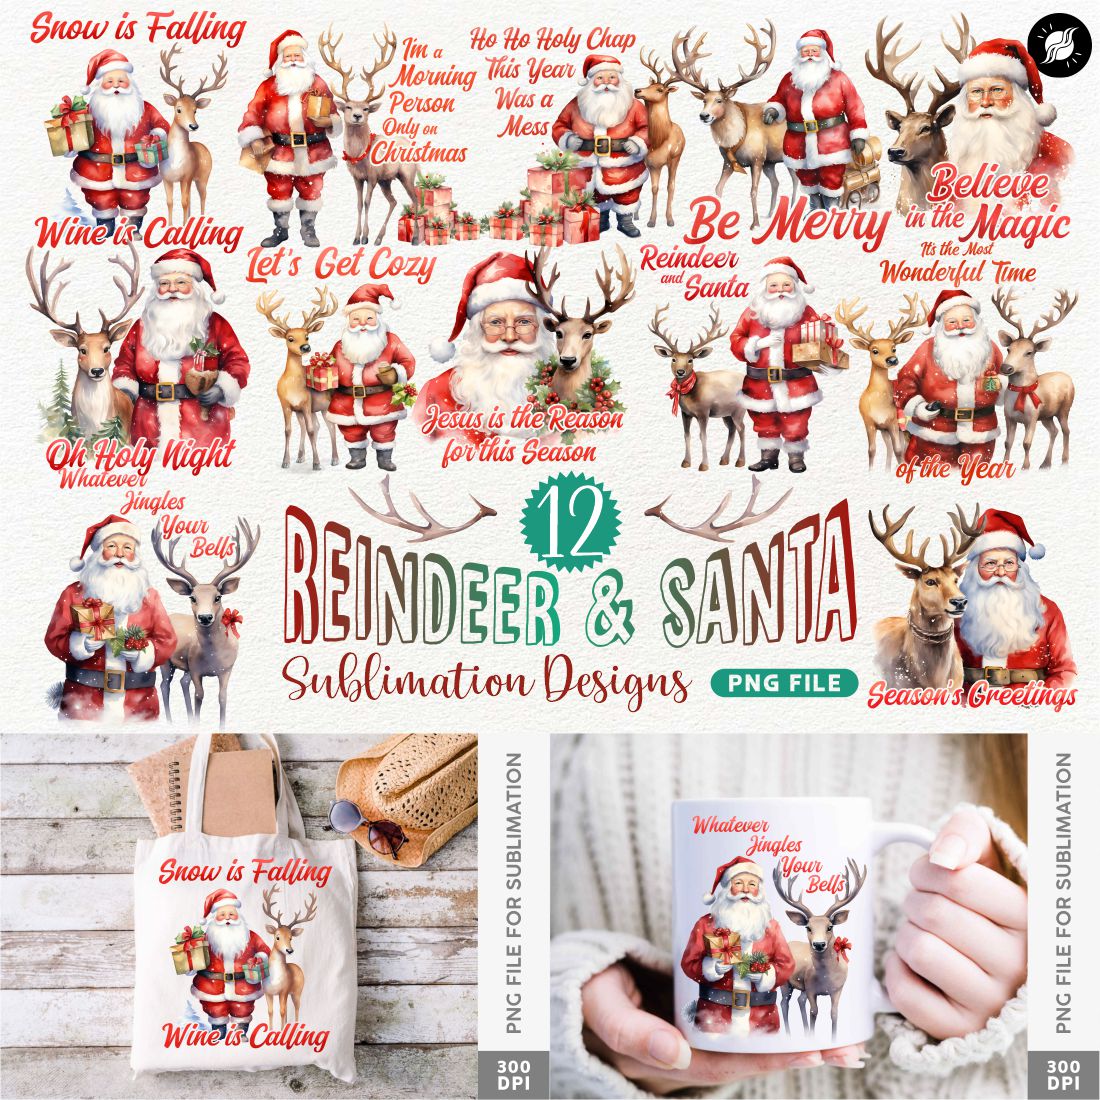 Christmas Reindeer Santa Sublimation Designs Bundle cover image.